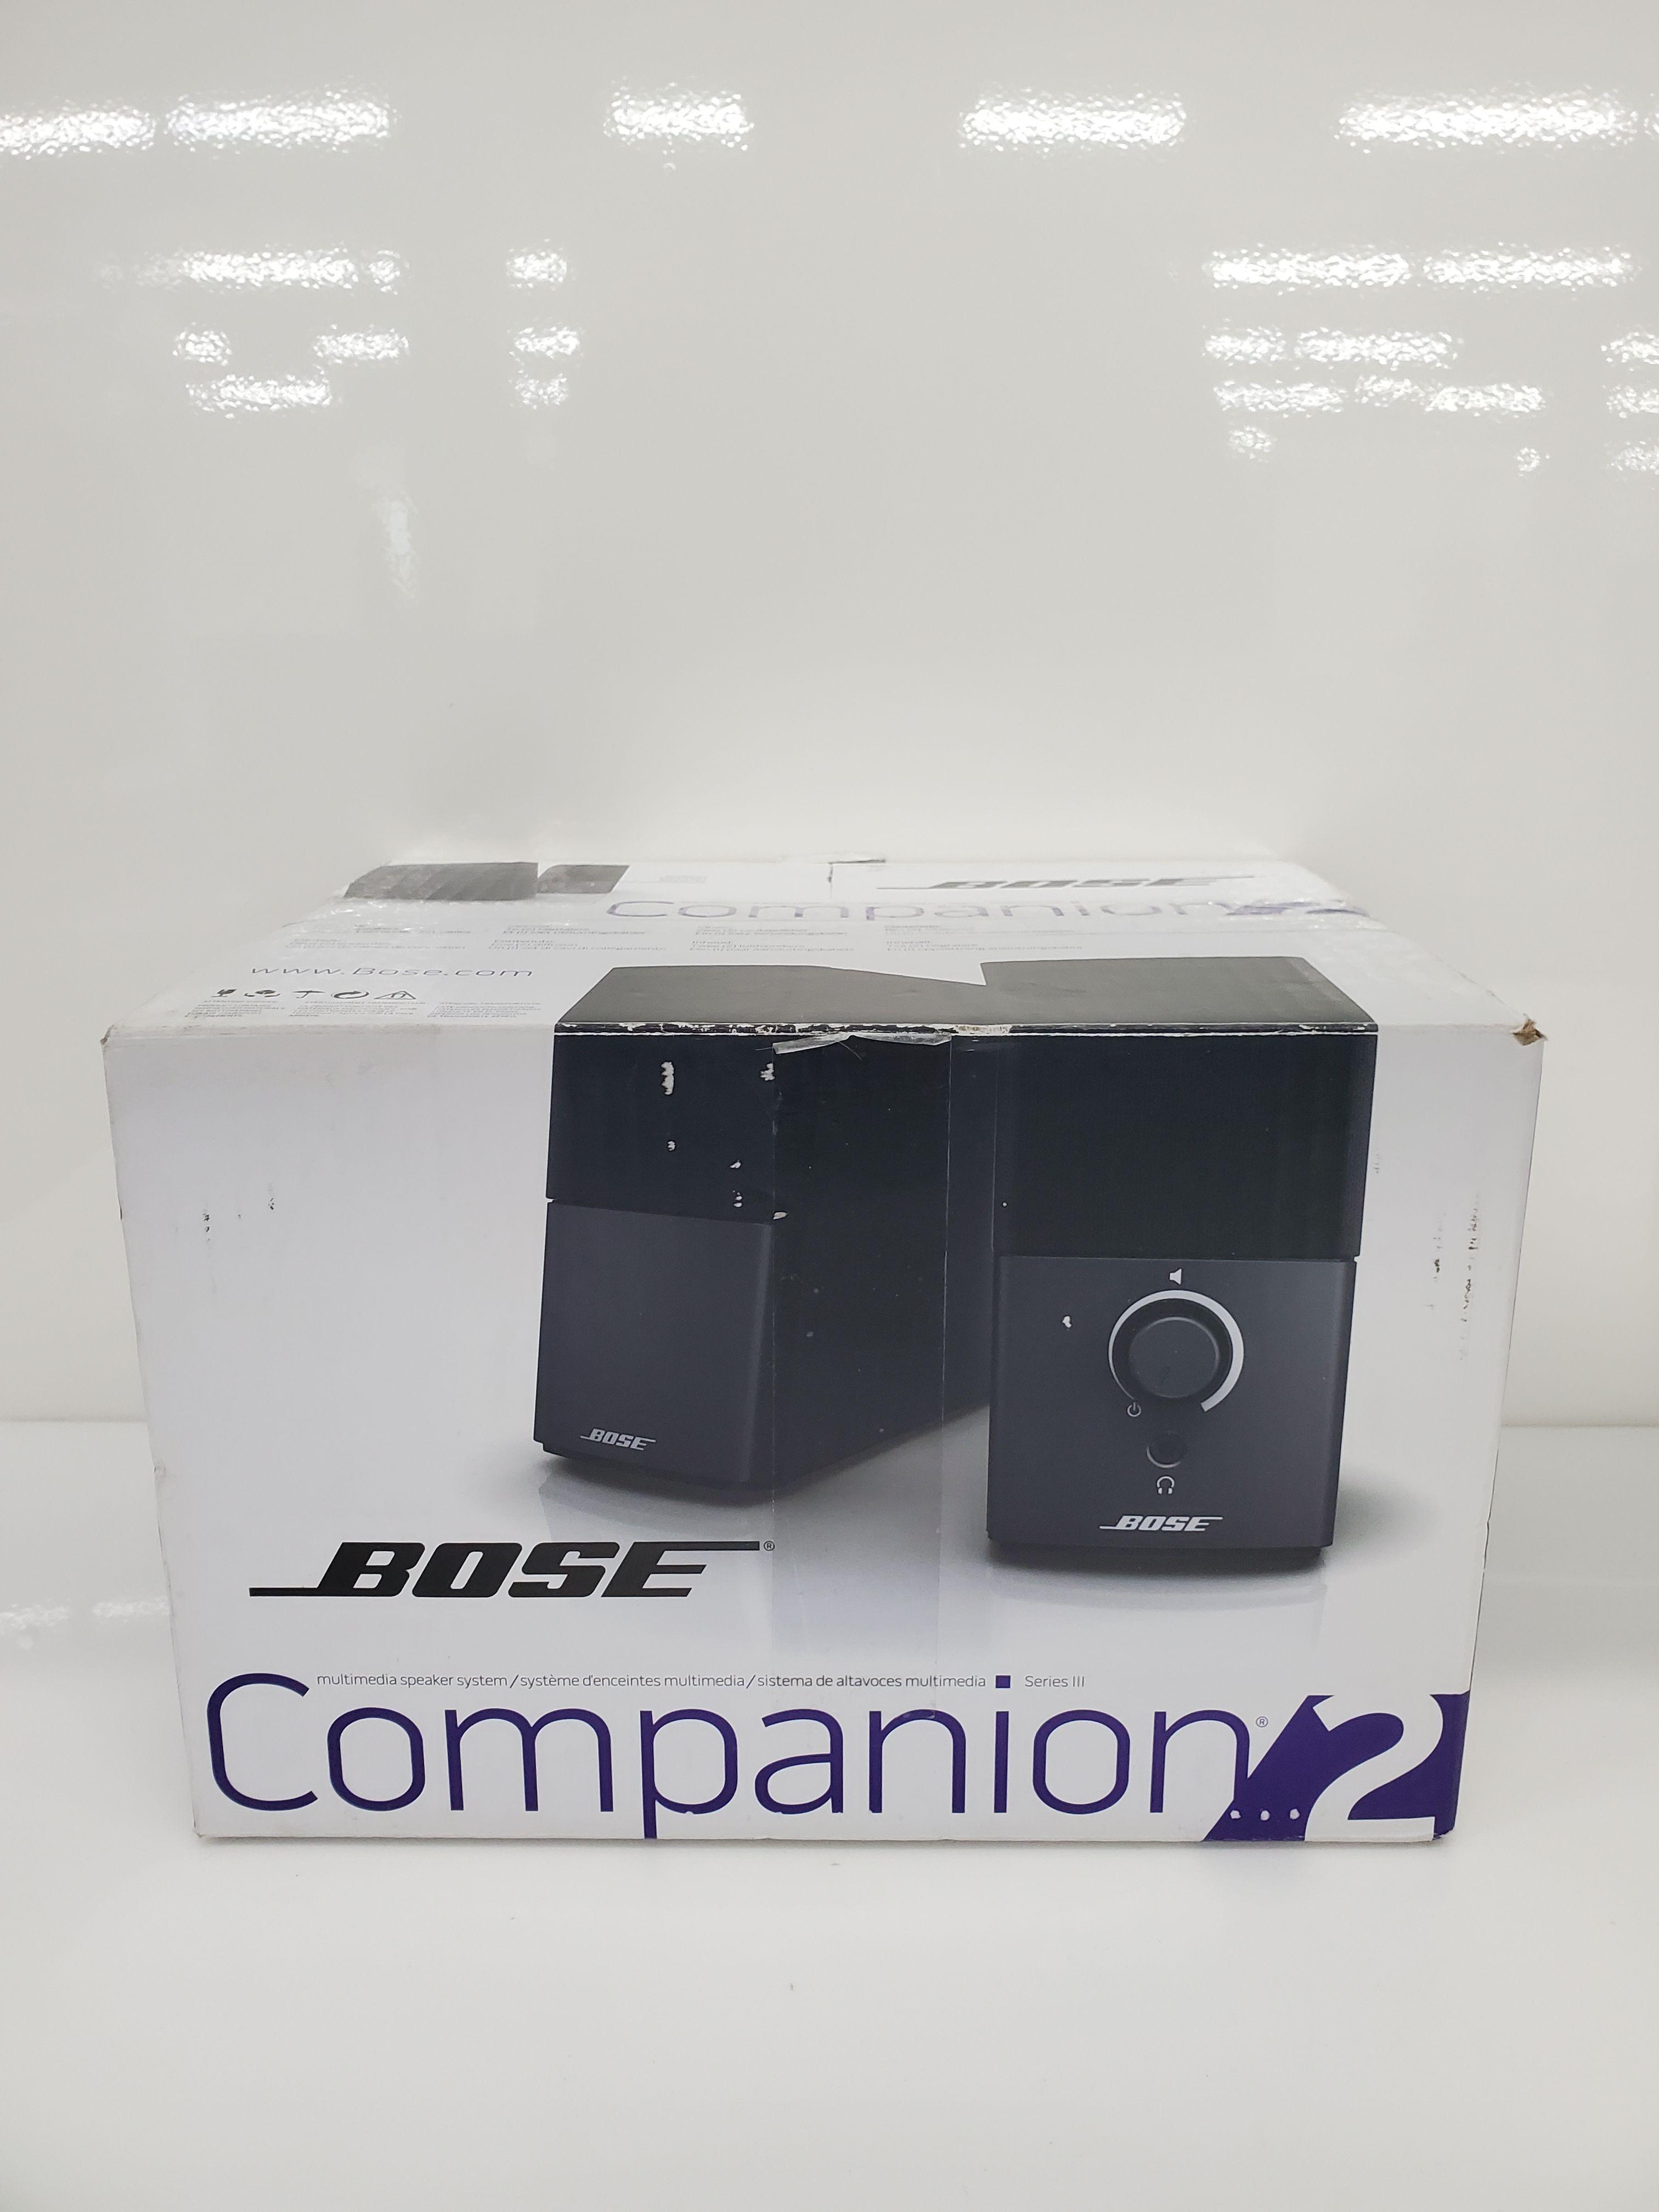 Bose ® Système d'enceintes multimédia Companion® 2 Série III